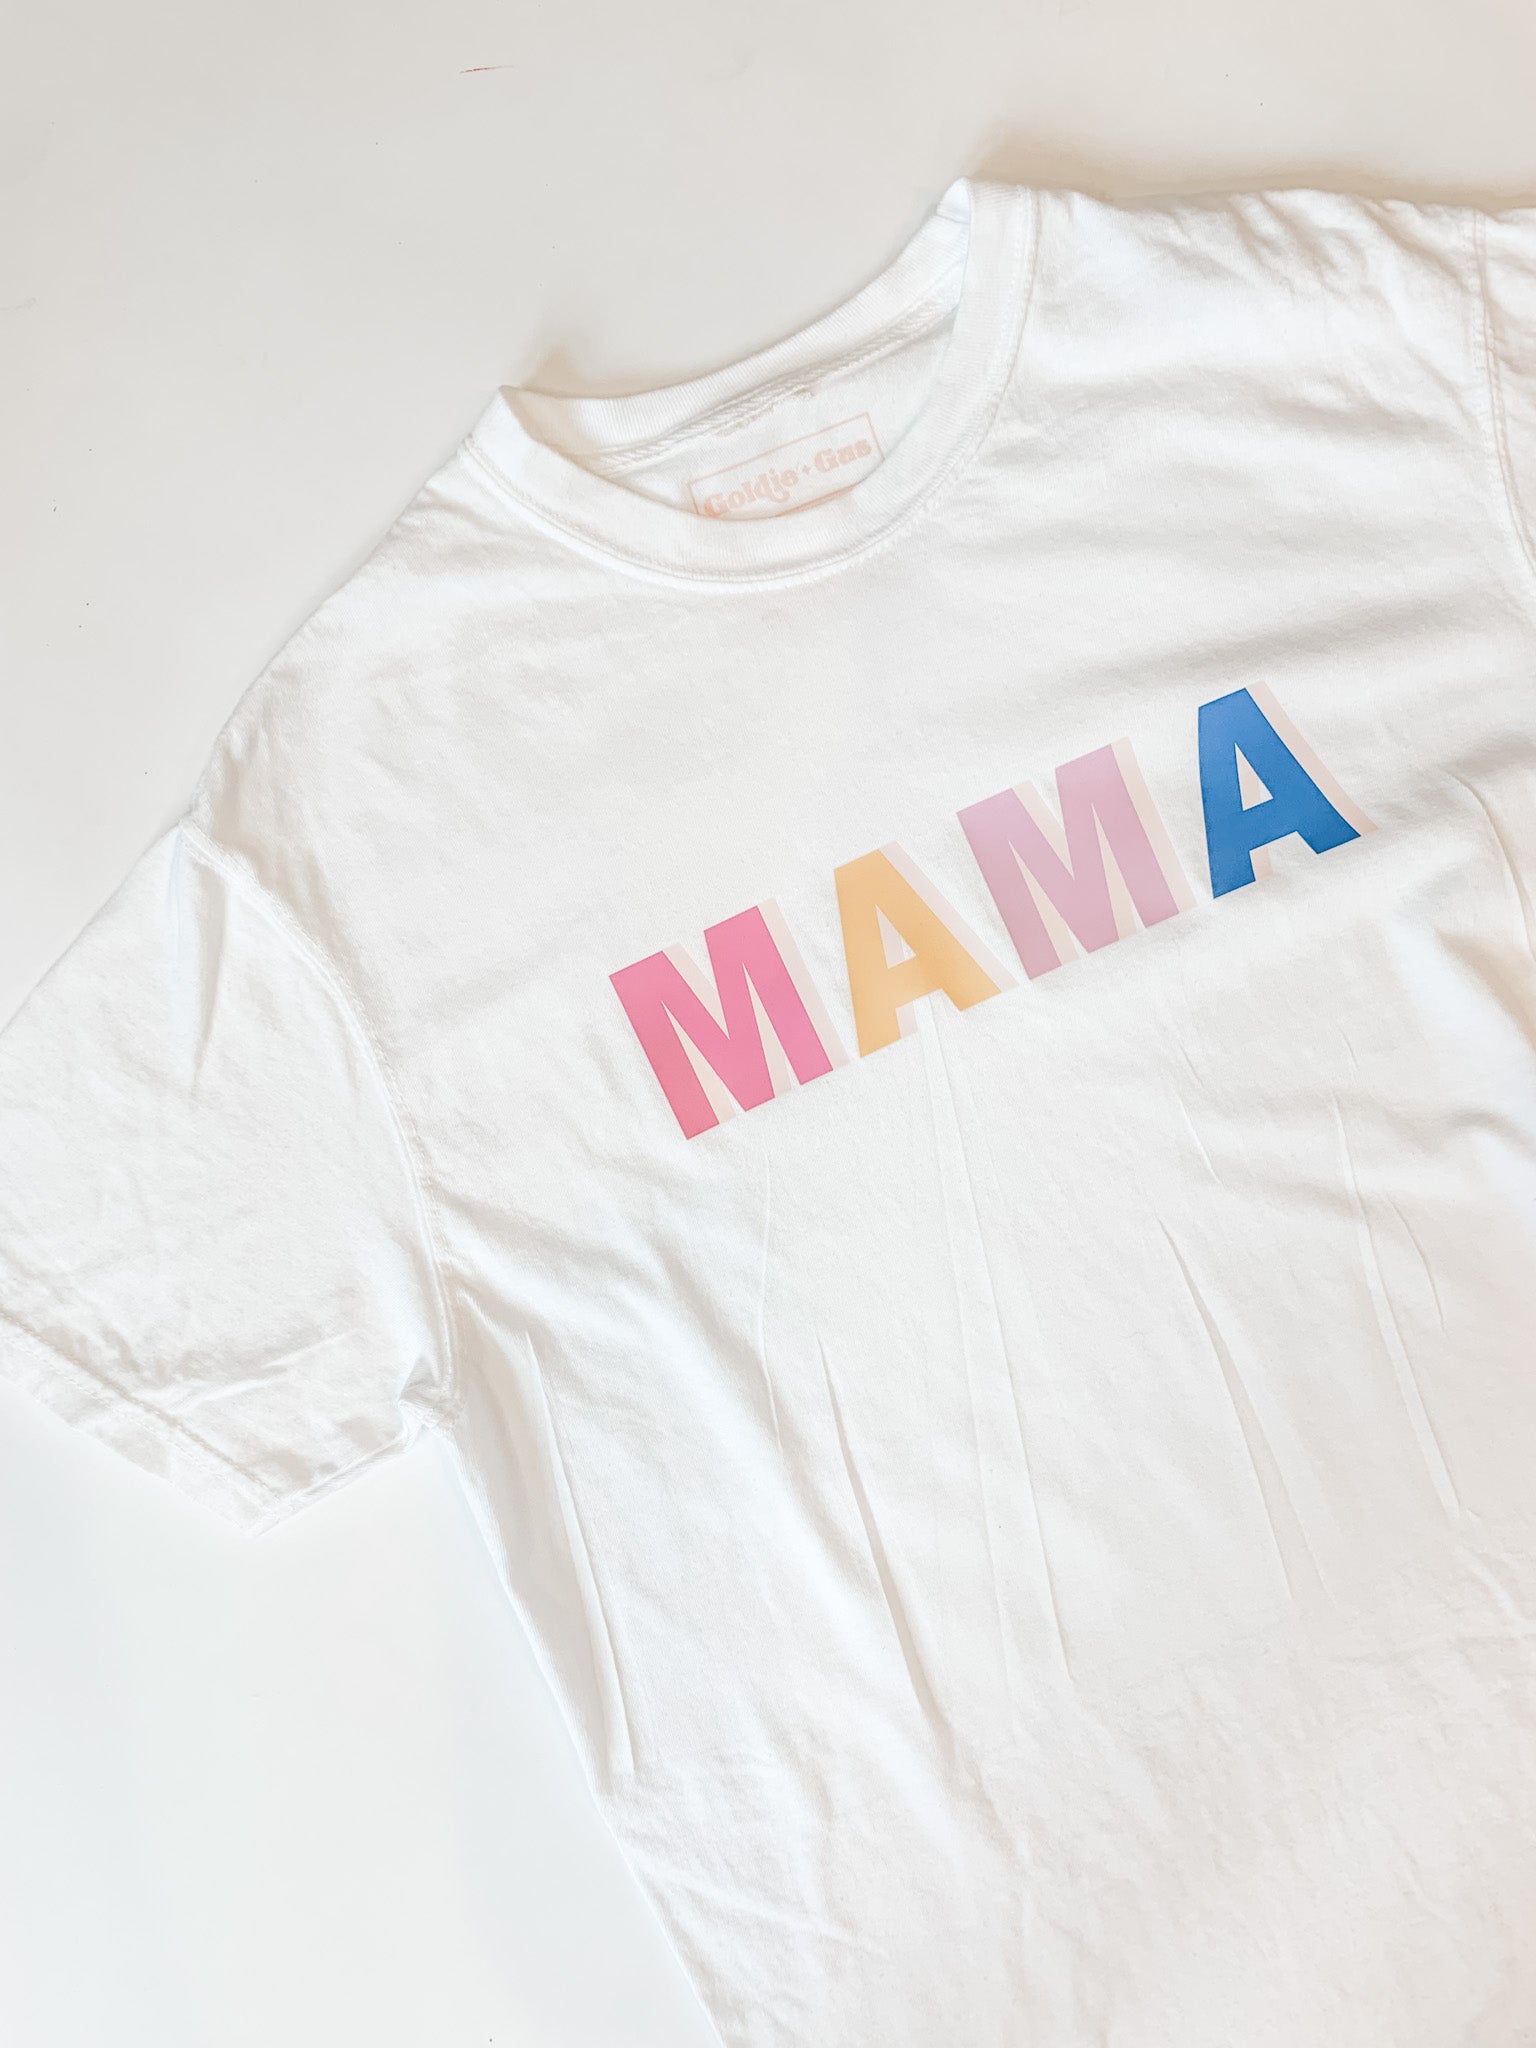 Mama Graphic Tee